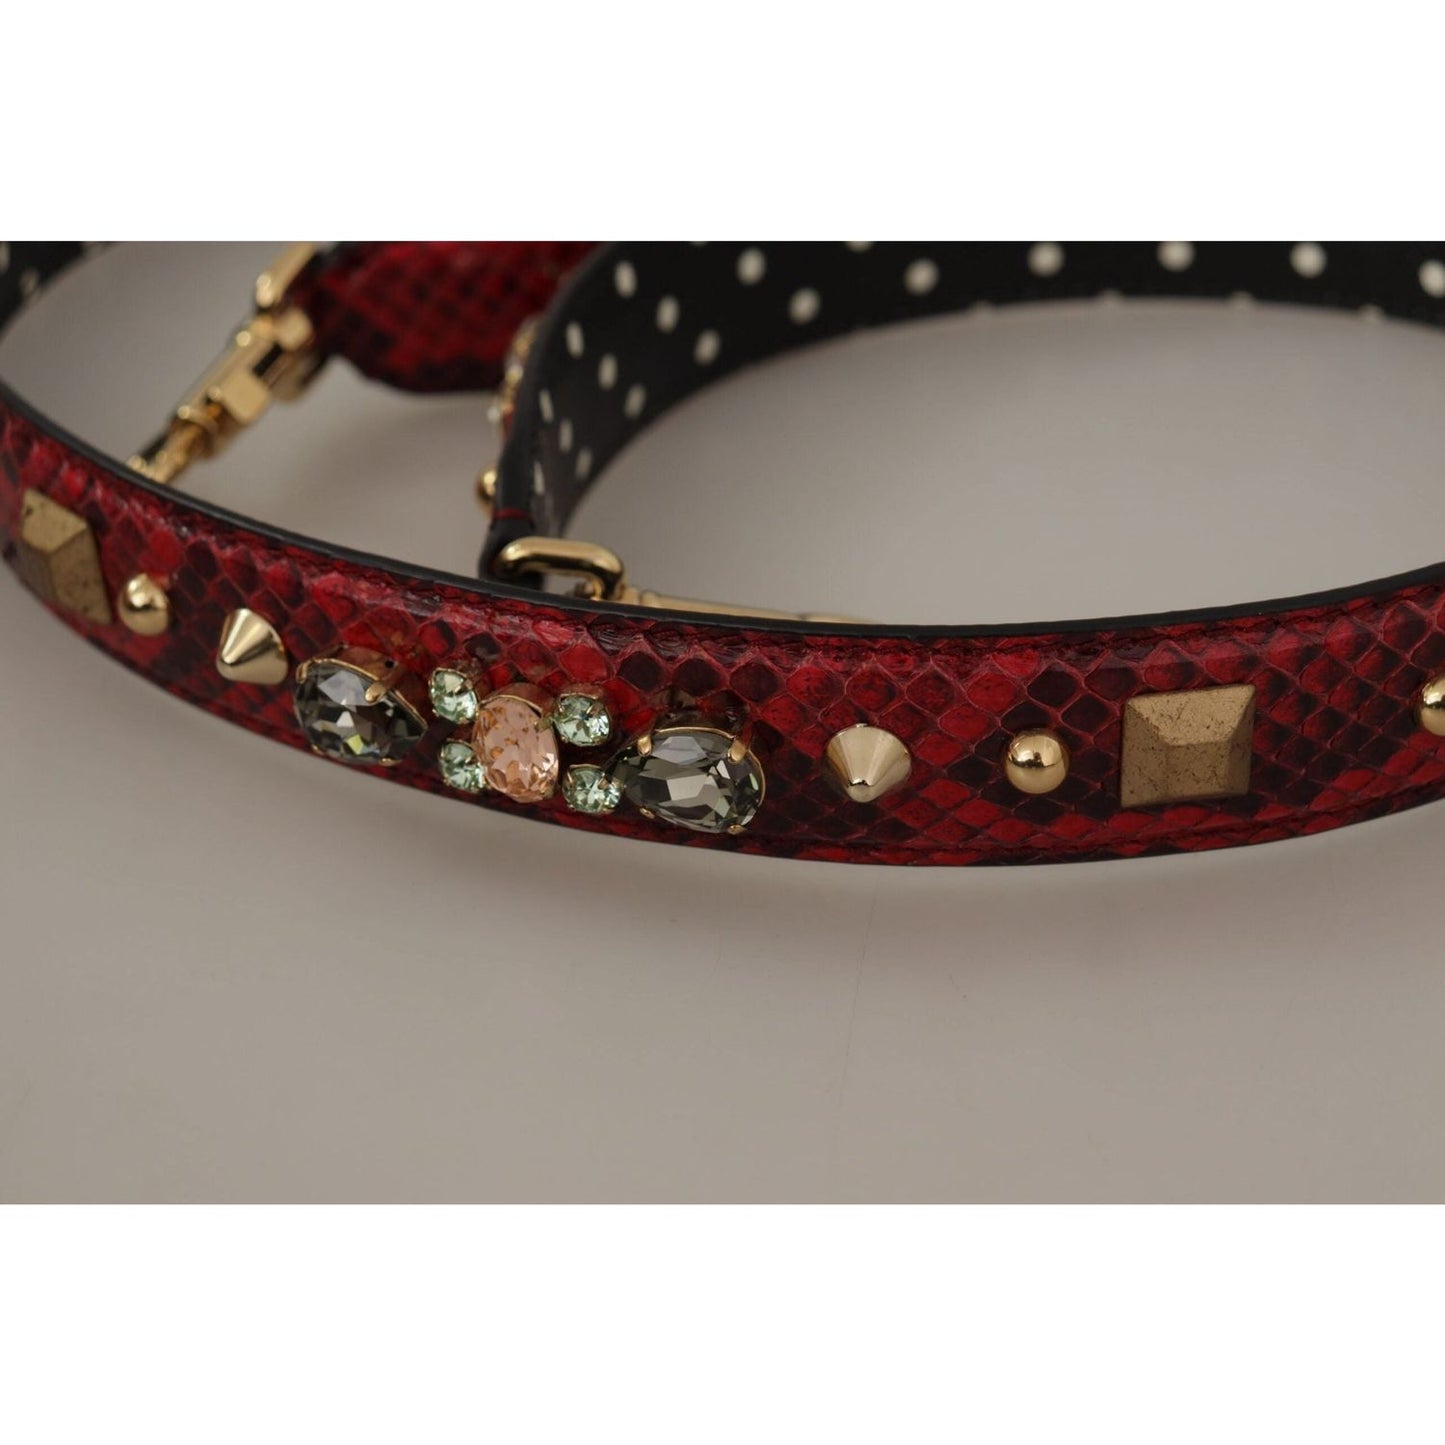 Dolce & Gabbana Red Python Leather Shoulder Bag Strap red-python-leather-crystals-reversible-shoulder-strap IMG_9900-scaled-4a17128f-a8e.jpg